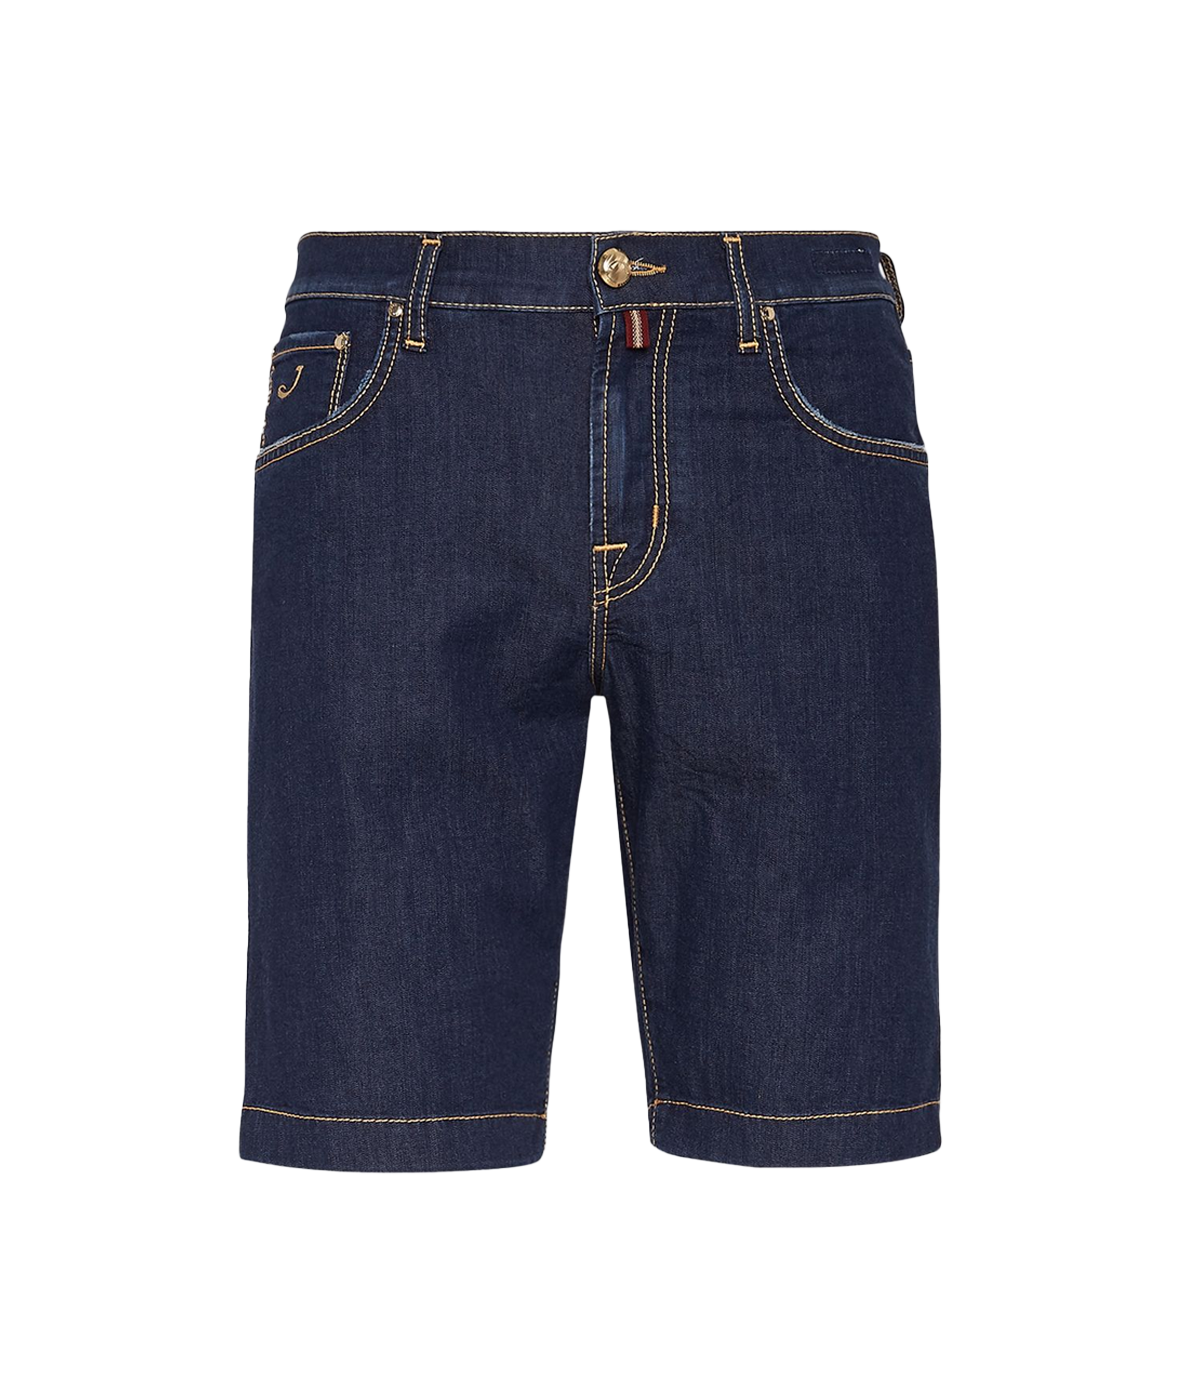 Bermuda 5 Pocket Slim Fit Shorts in Blue